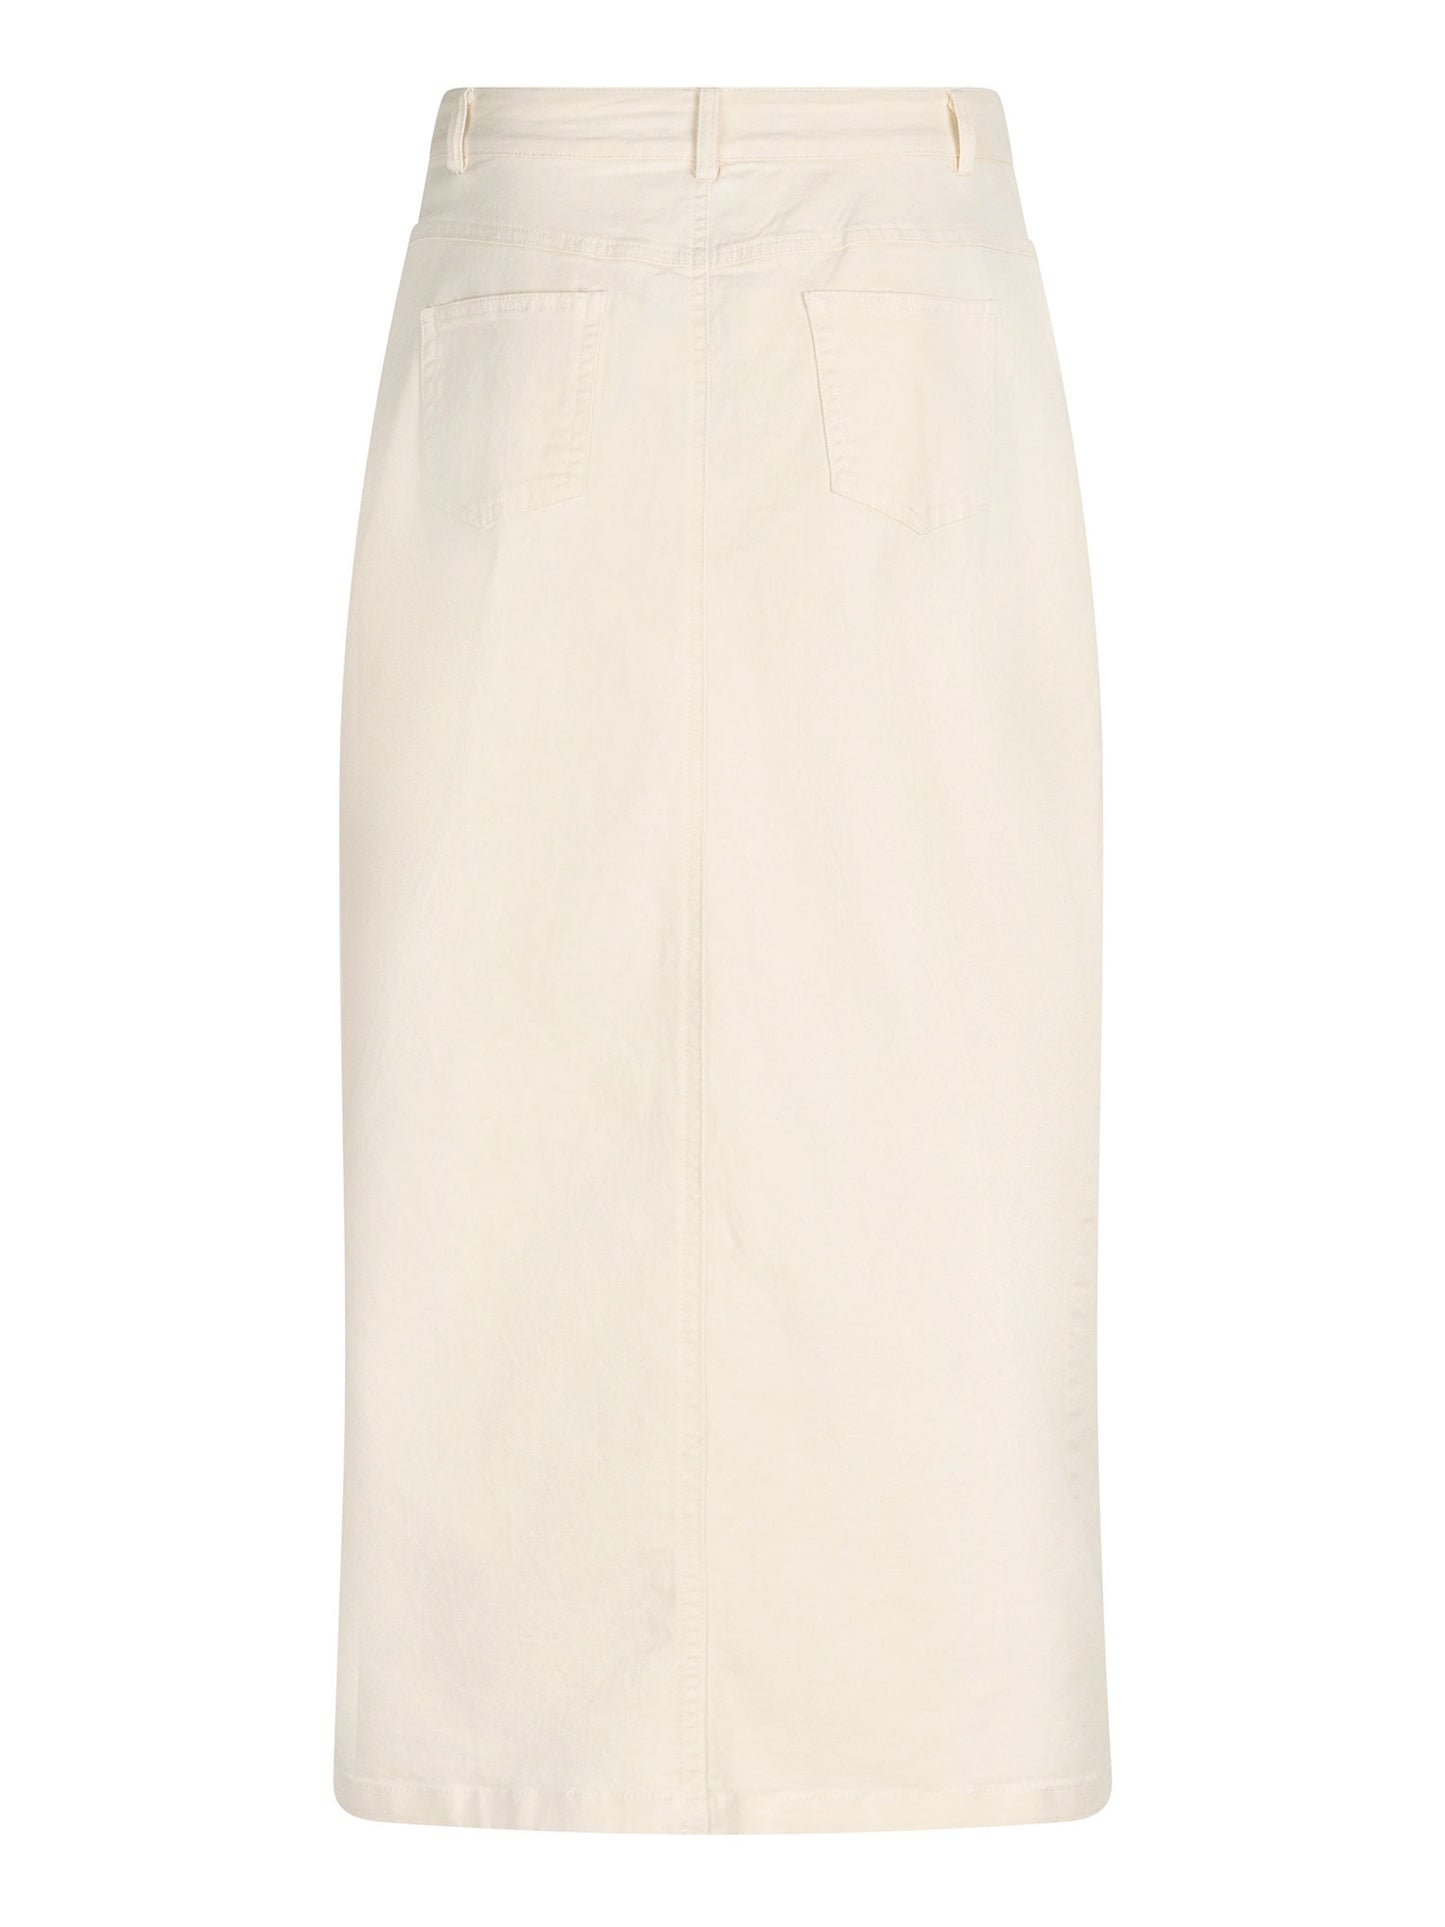 Skirt tristie off white